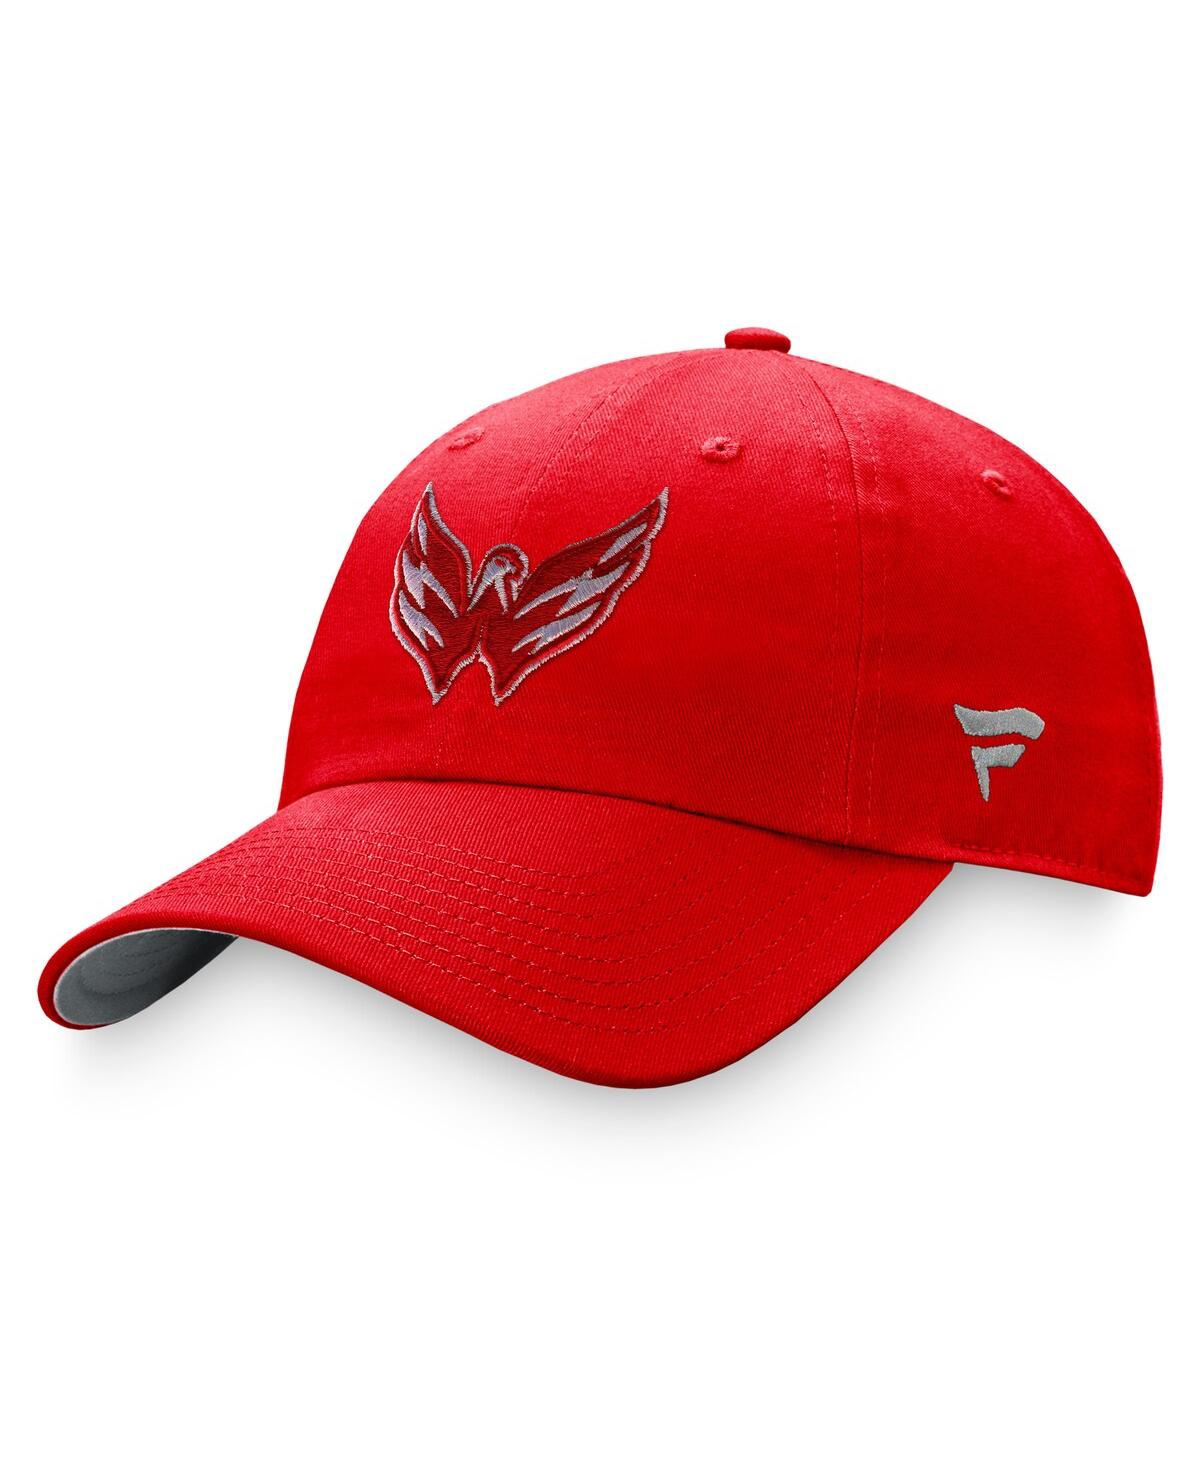 Fanatics Women's  Red Washington Capitals Iconic Glimmer Adjustable Hat